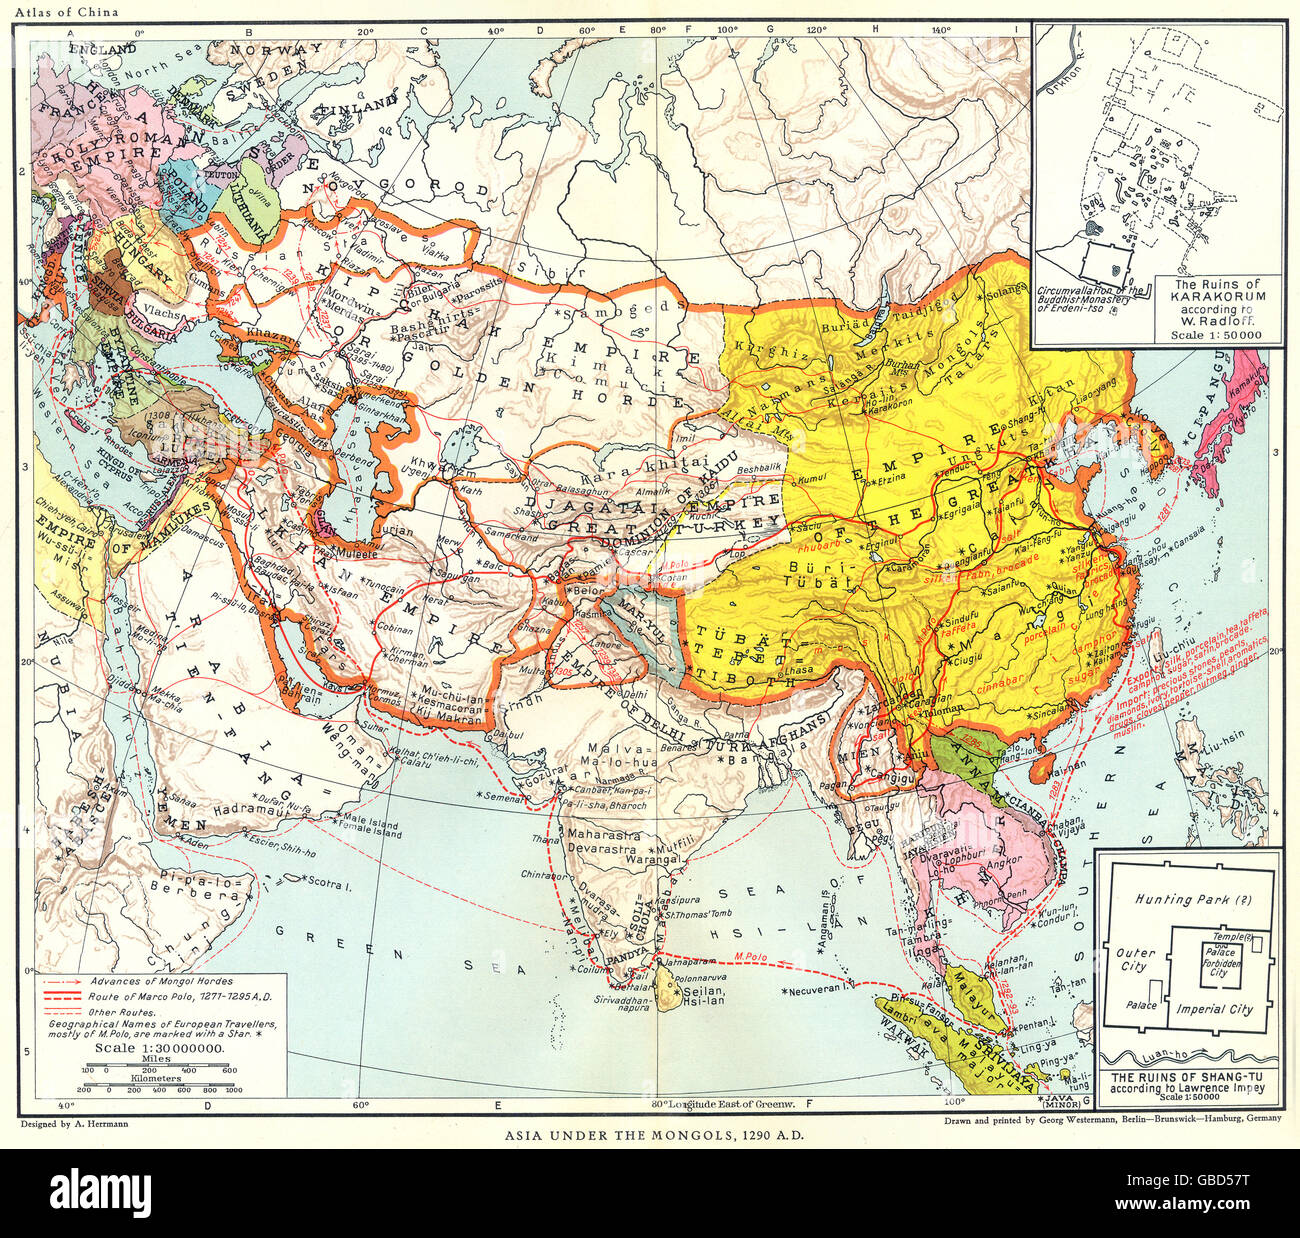 ASIA: Under the Mongols 1290 AD; Inset Shang-Tu Karakorum ruins, 1935 old map Stock Photo